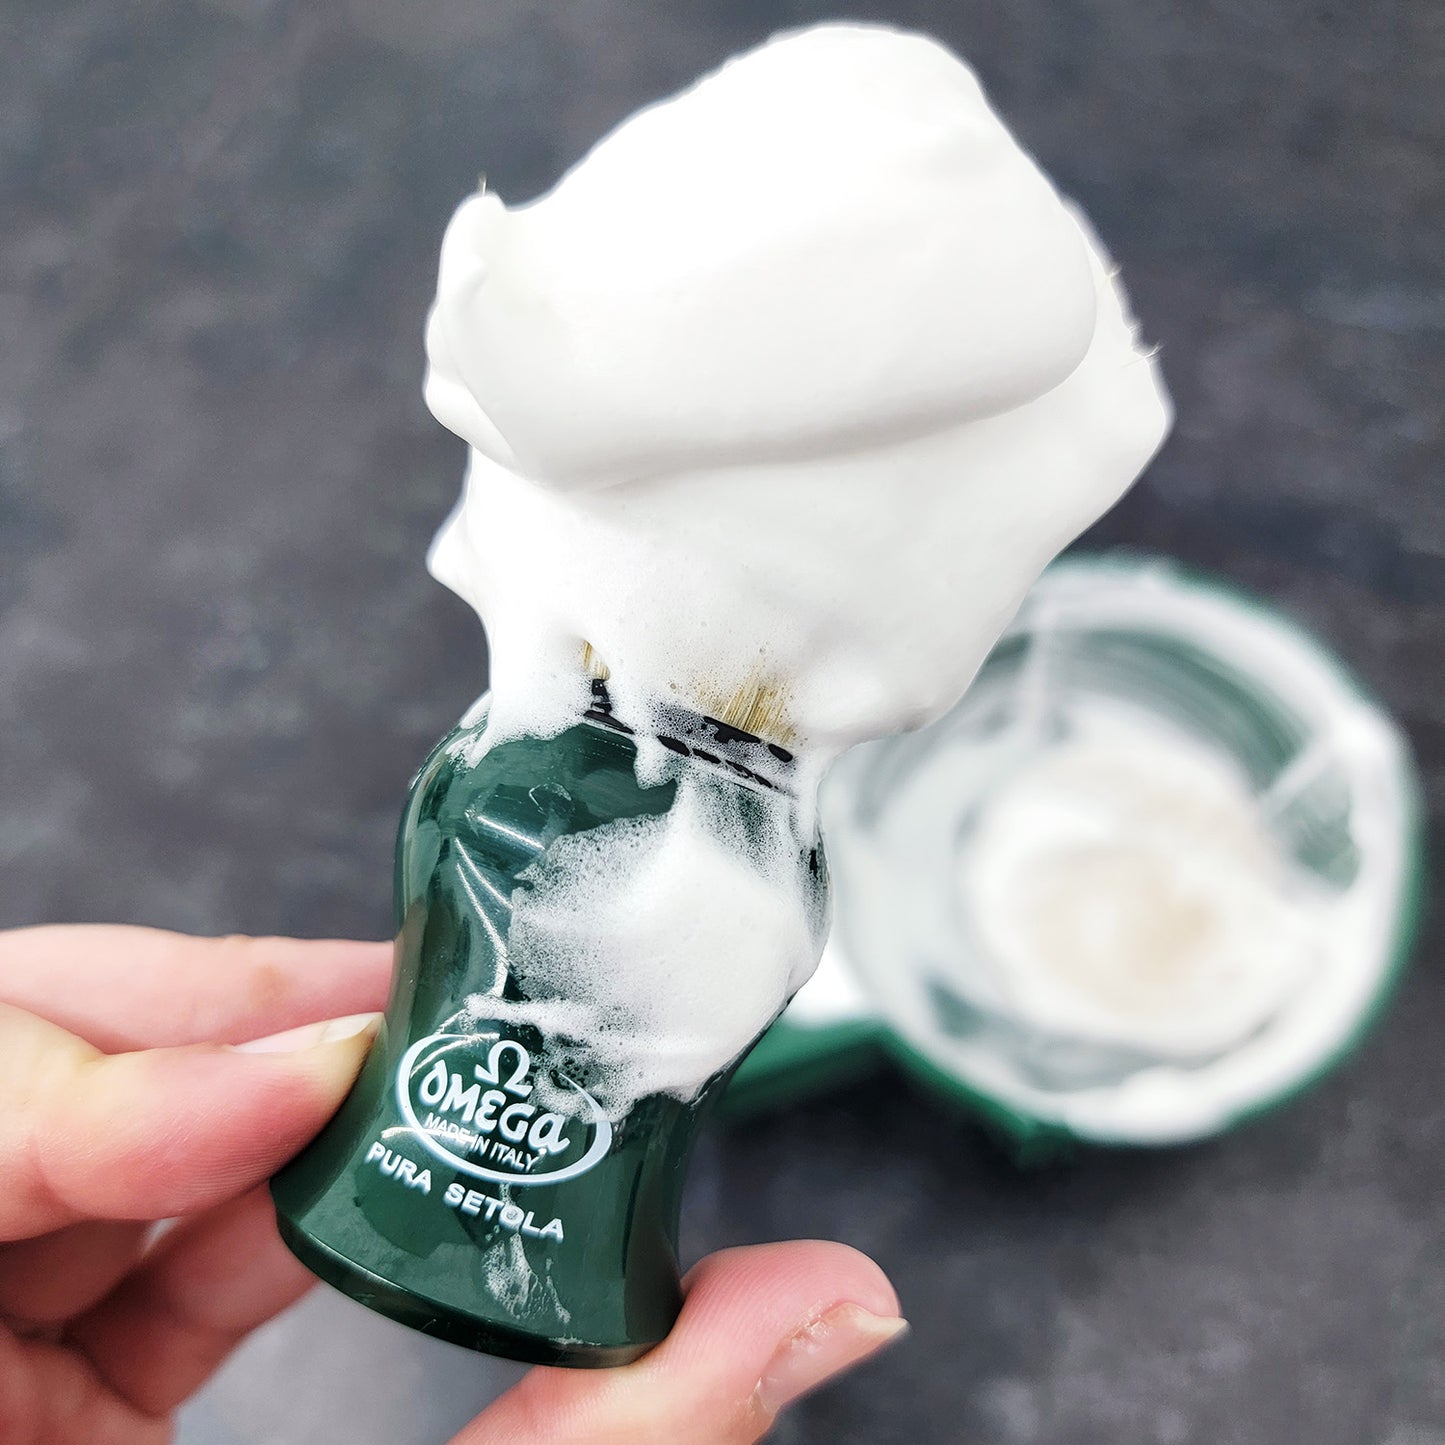 Traditional Shaving Soap